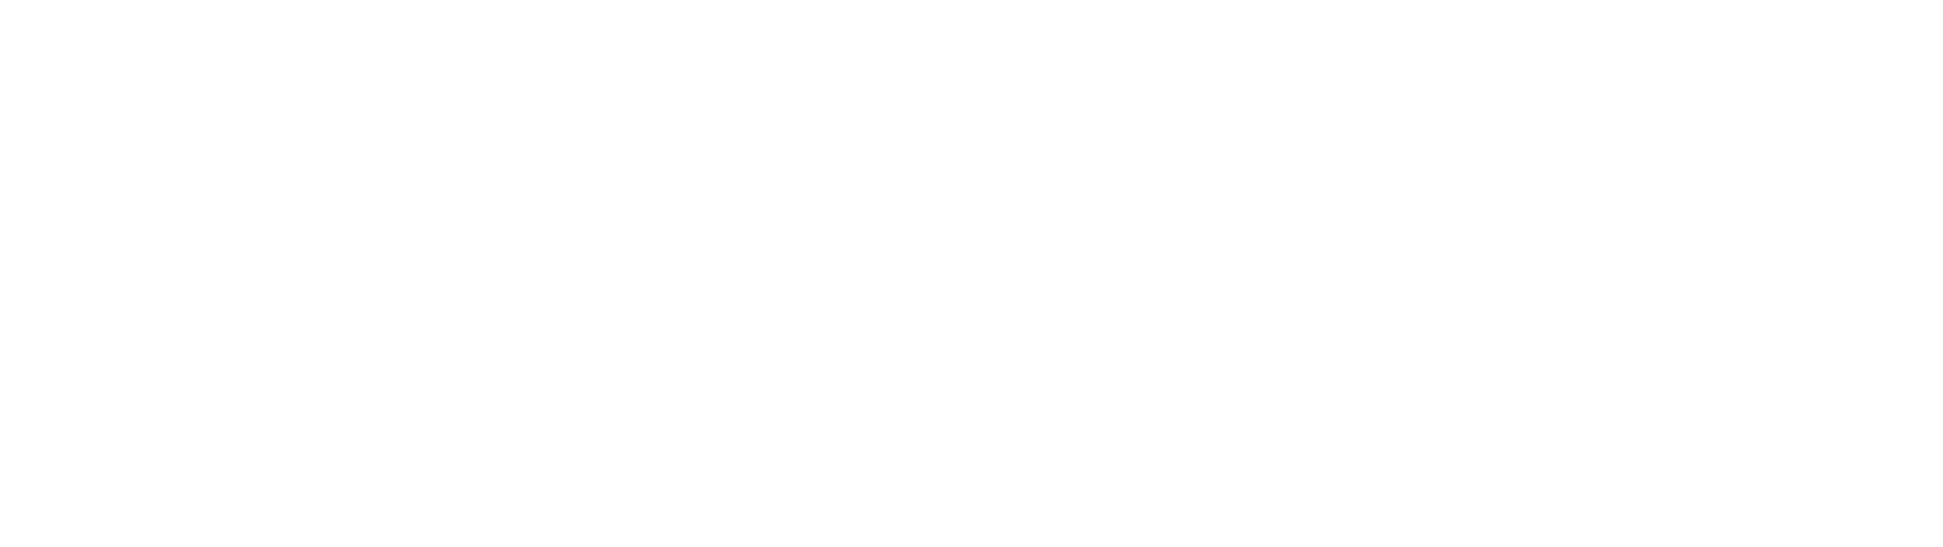 QUEX S logo white.png